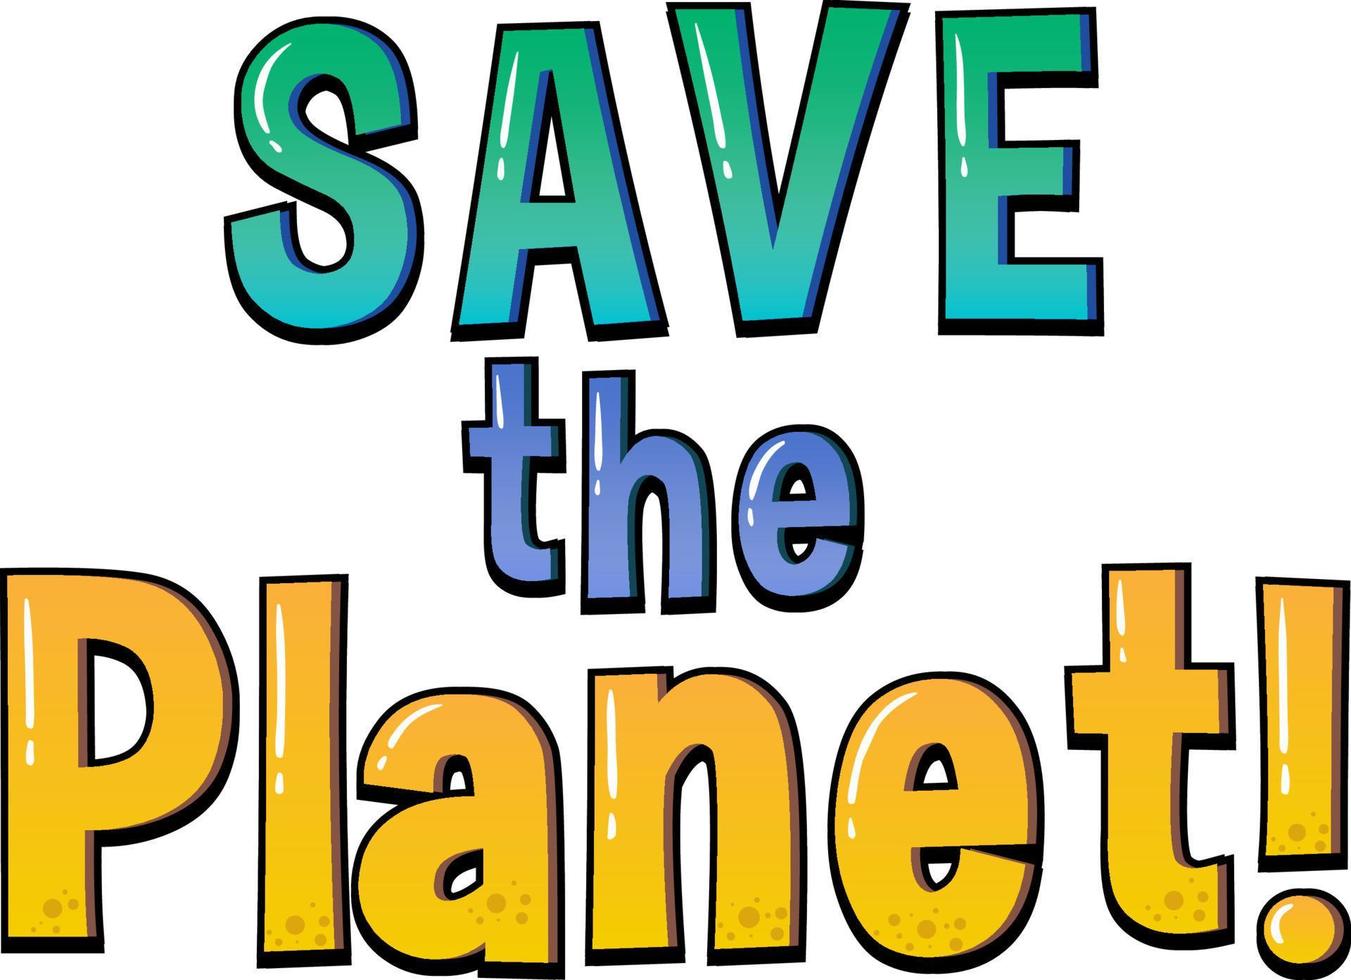 Save the planet font logo design vector